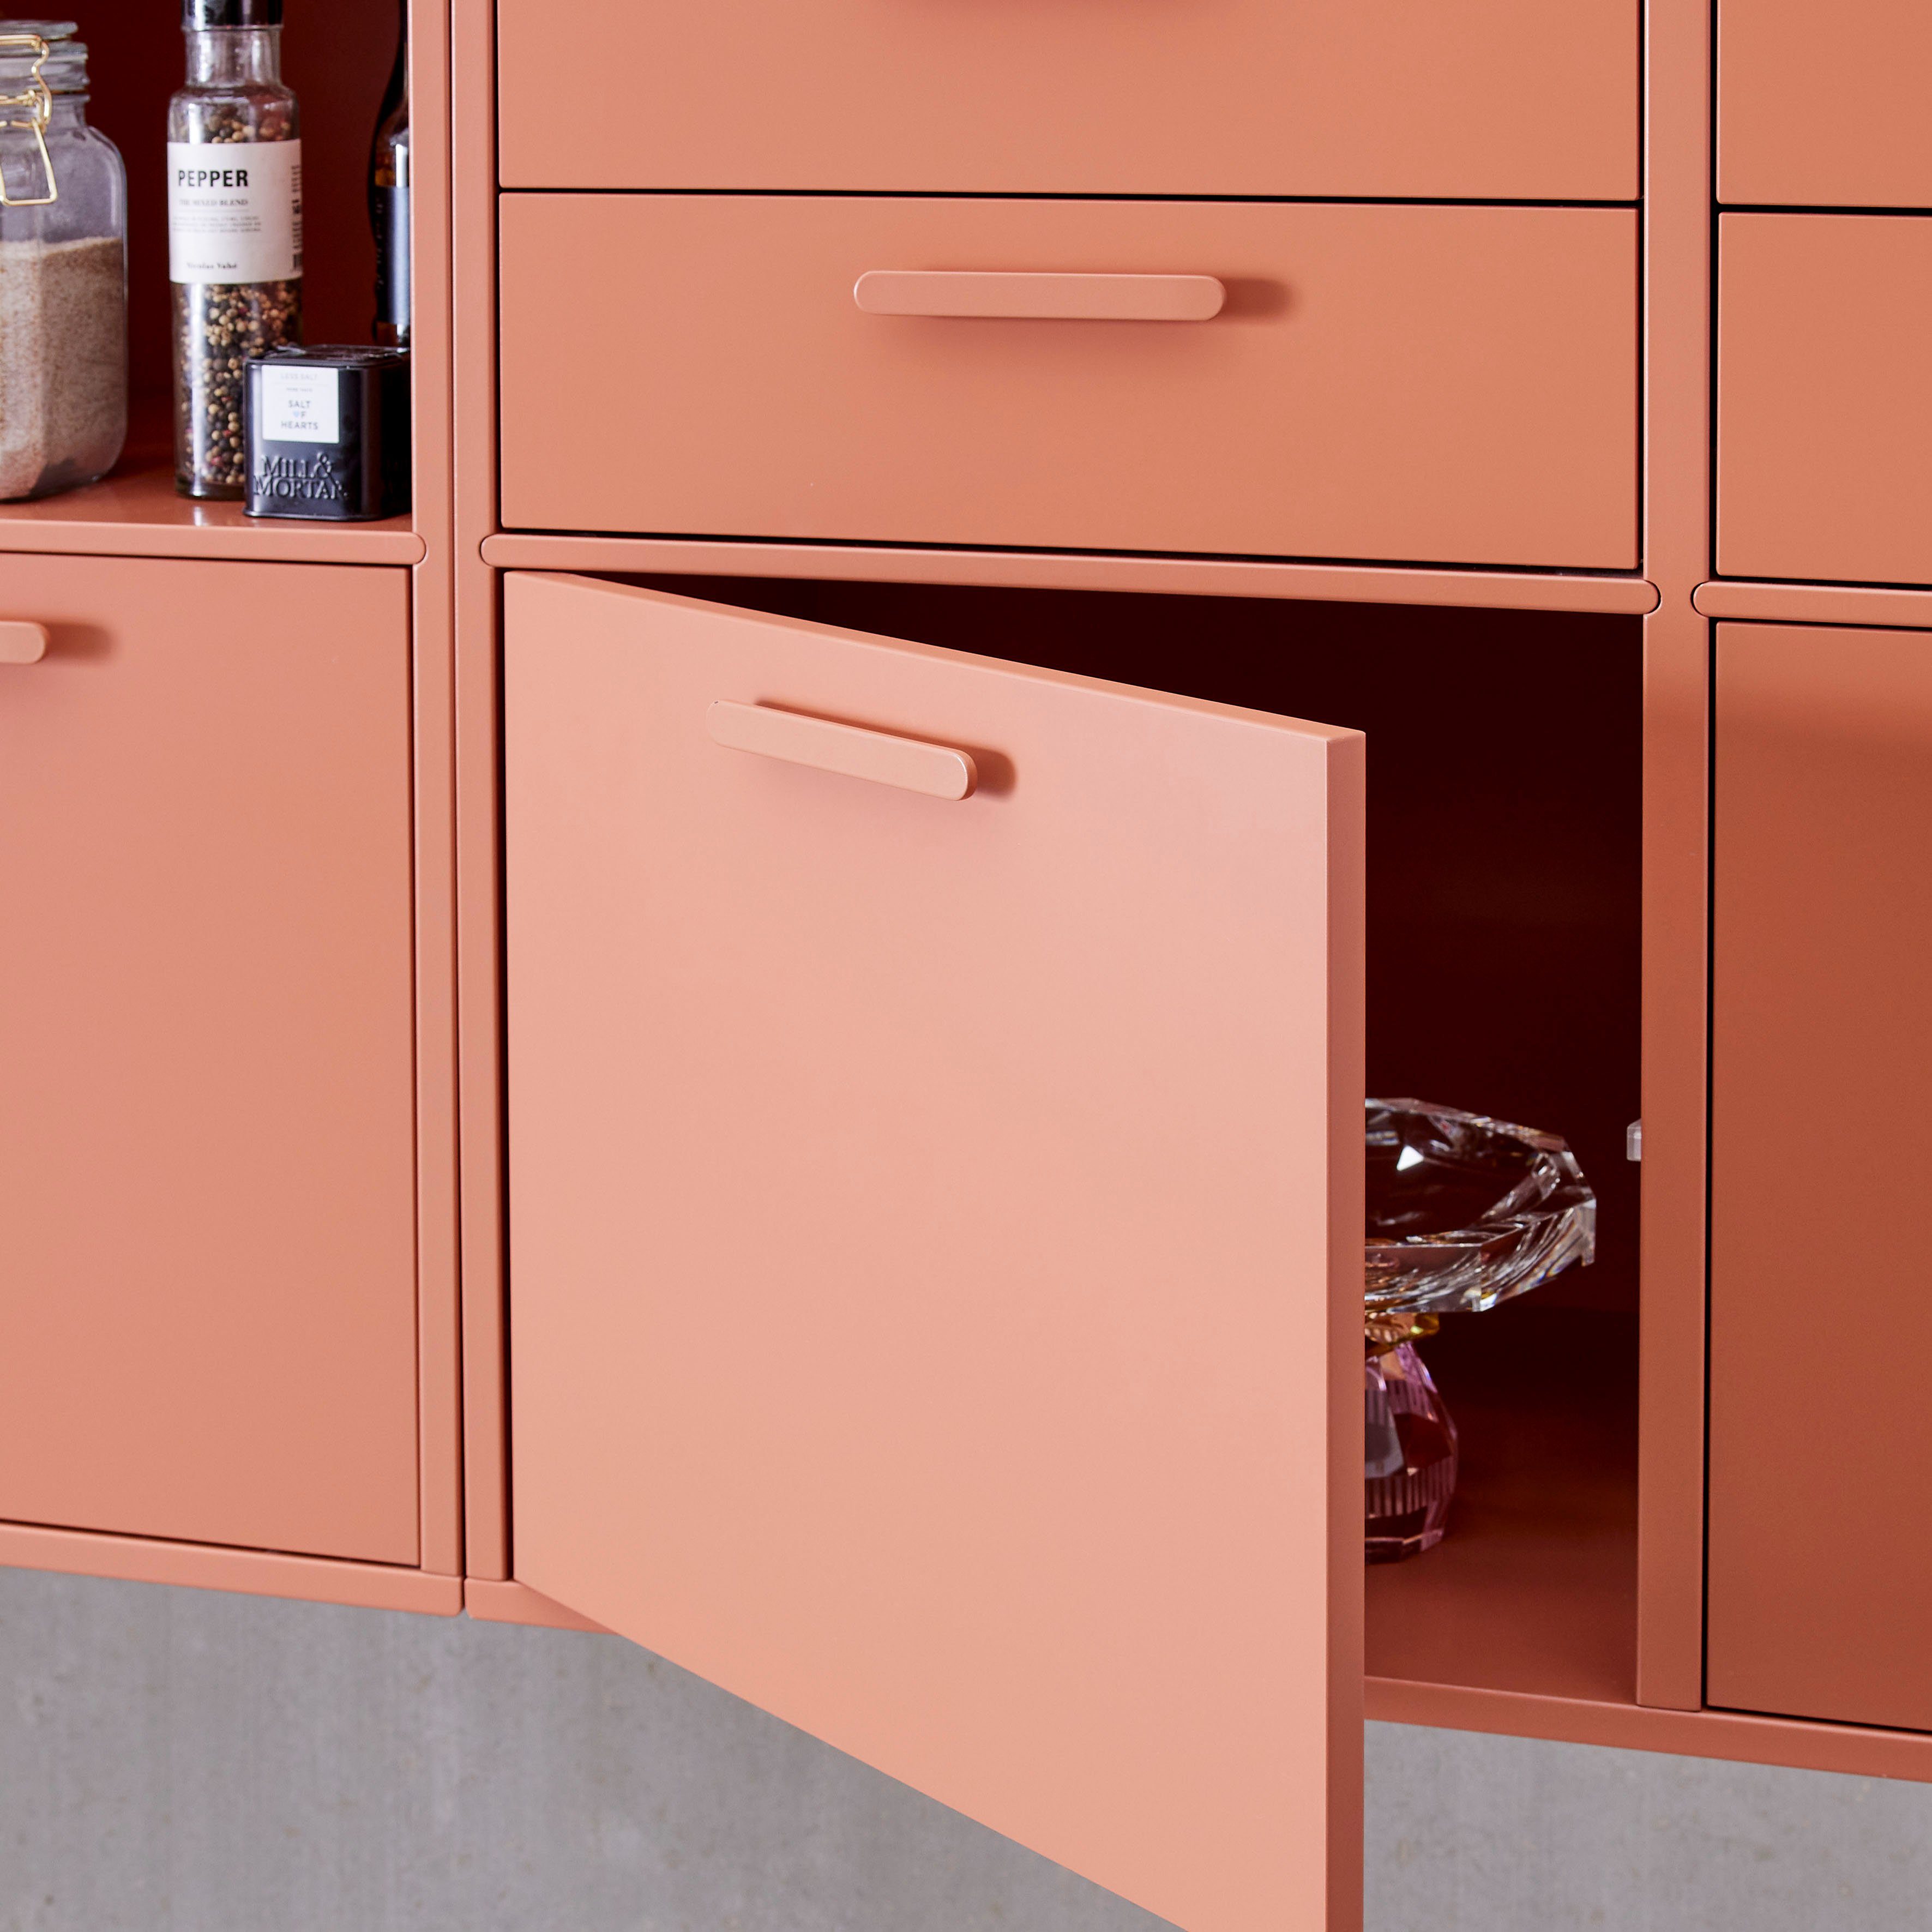 Ergänzung Terrakotta das 031 Hammel (1 als flexible Möbelserie für by Furniture Hammel 006, Modul St), Keep Modul Schranktür